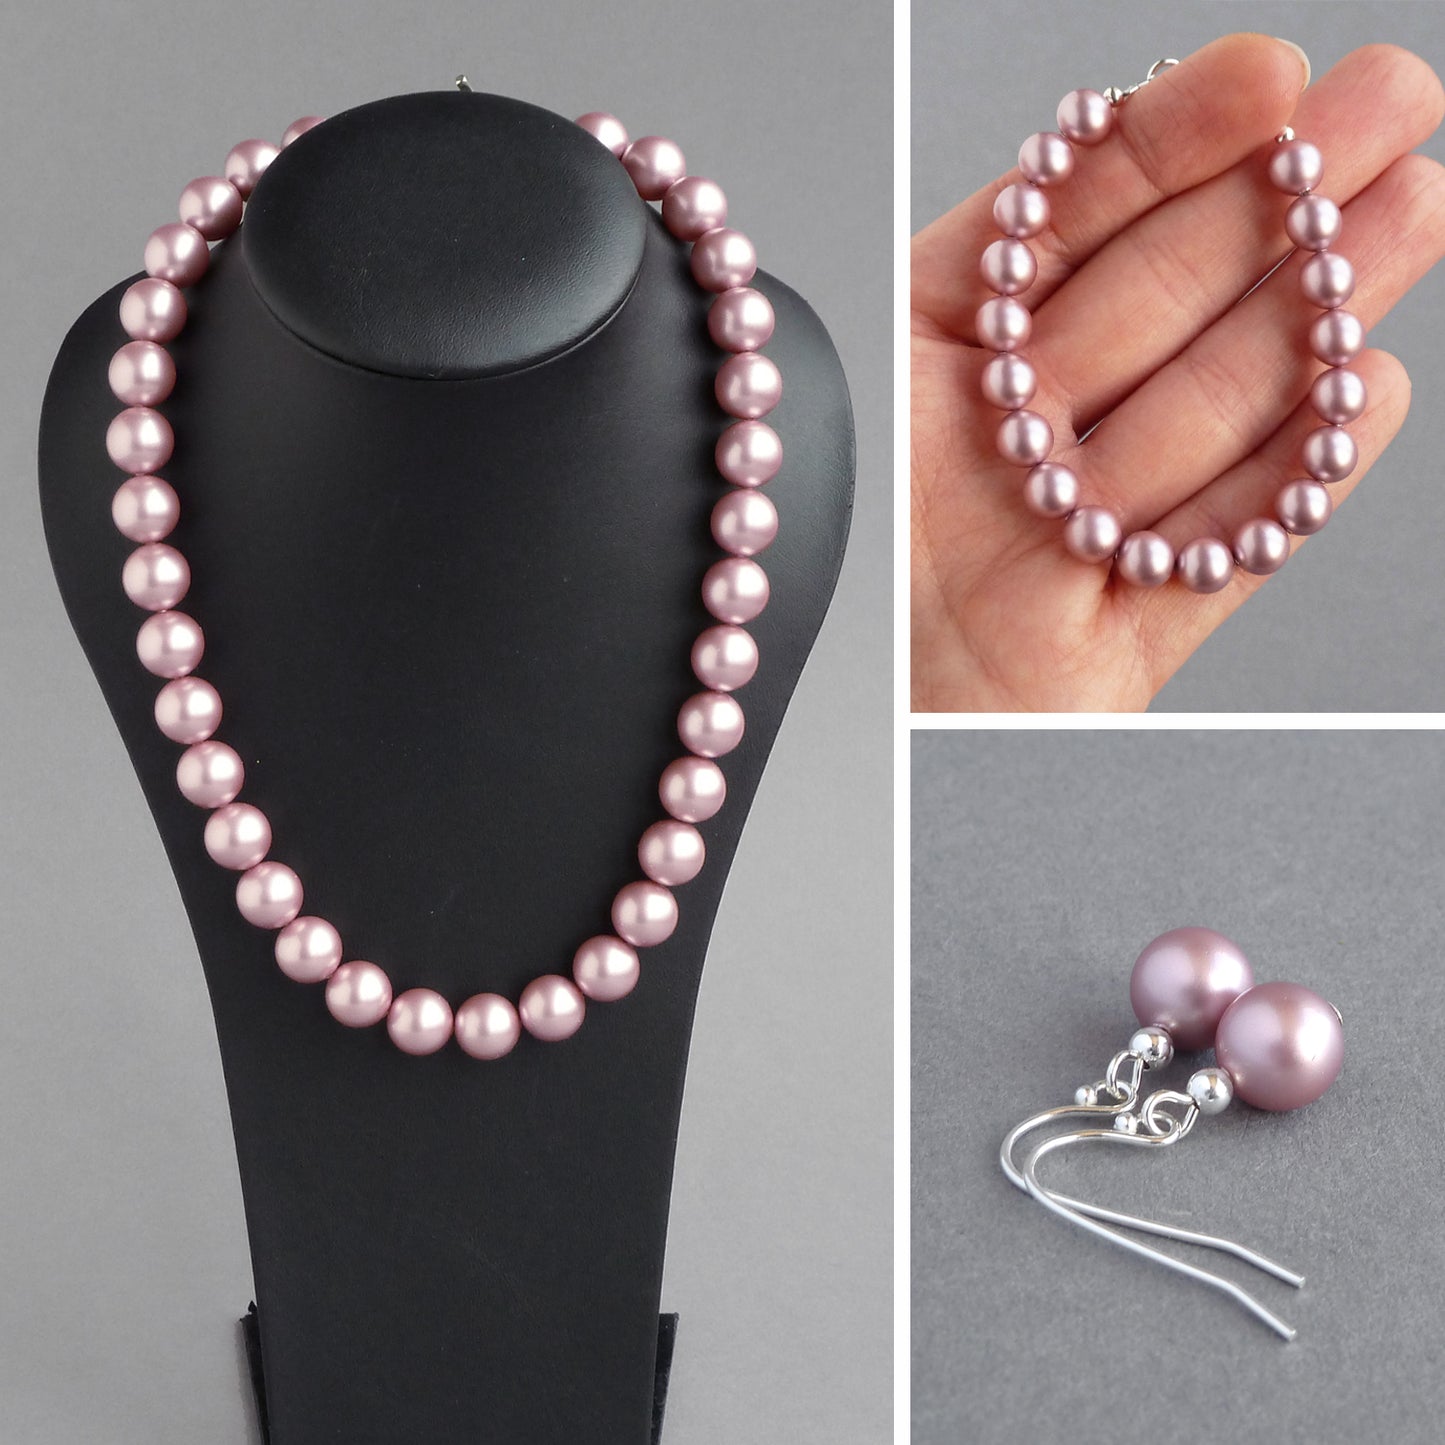 Chunky dusky pink pearl jewellery set - powder pink necklace, single strand bracelet and drop earrings